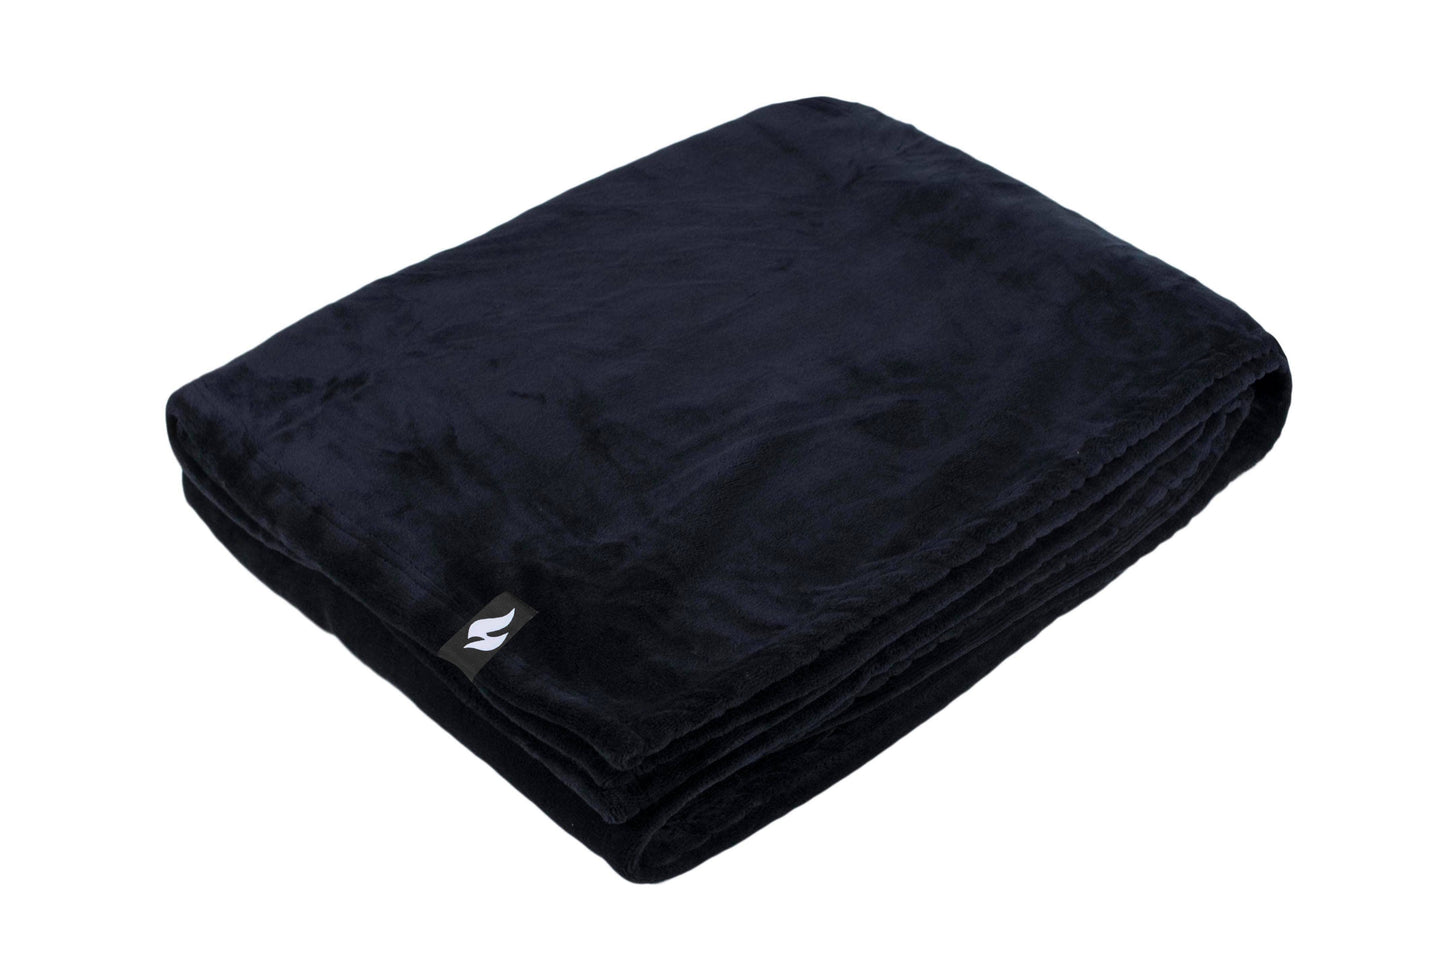 Homeware  -  Heat Holder Blanket - Black  -  60009949